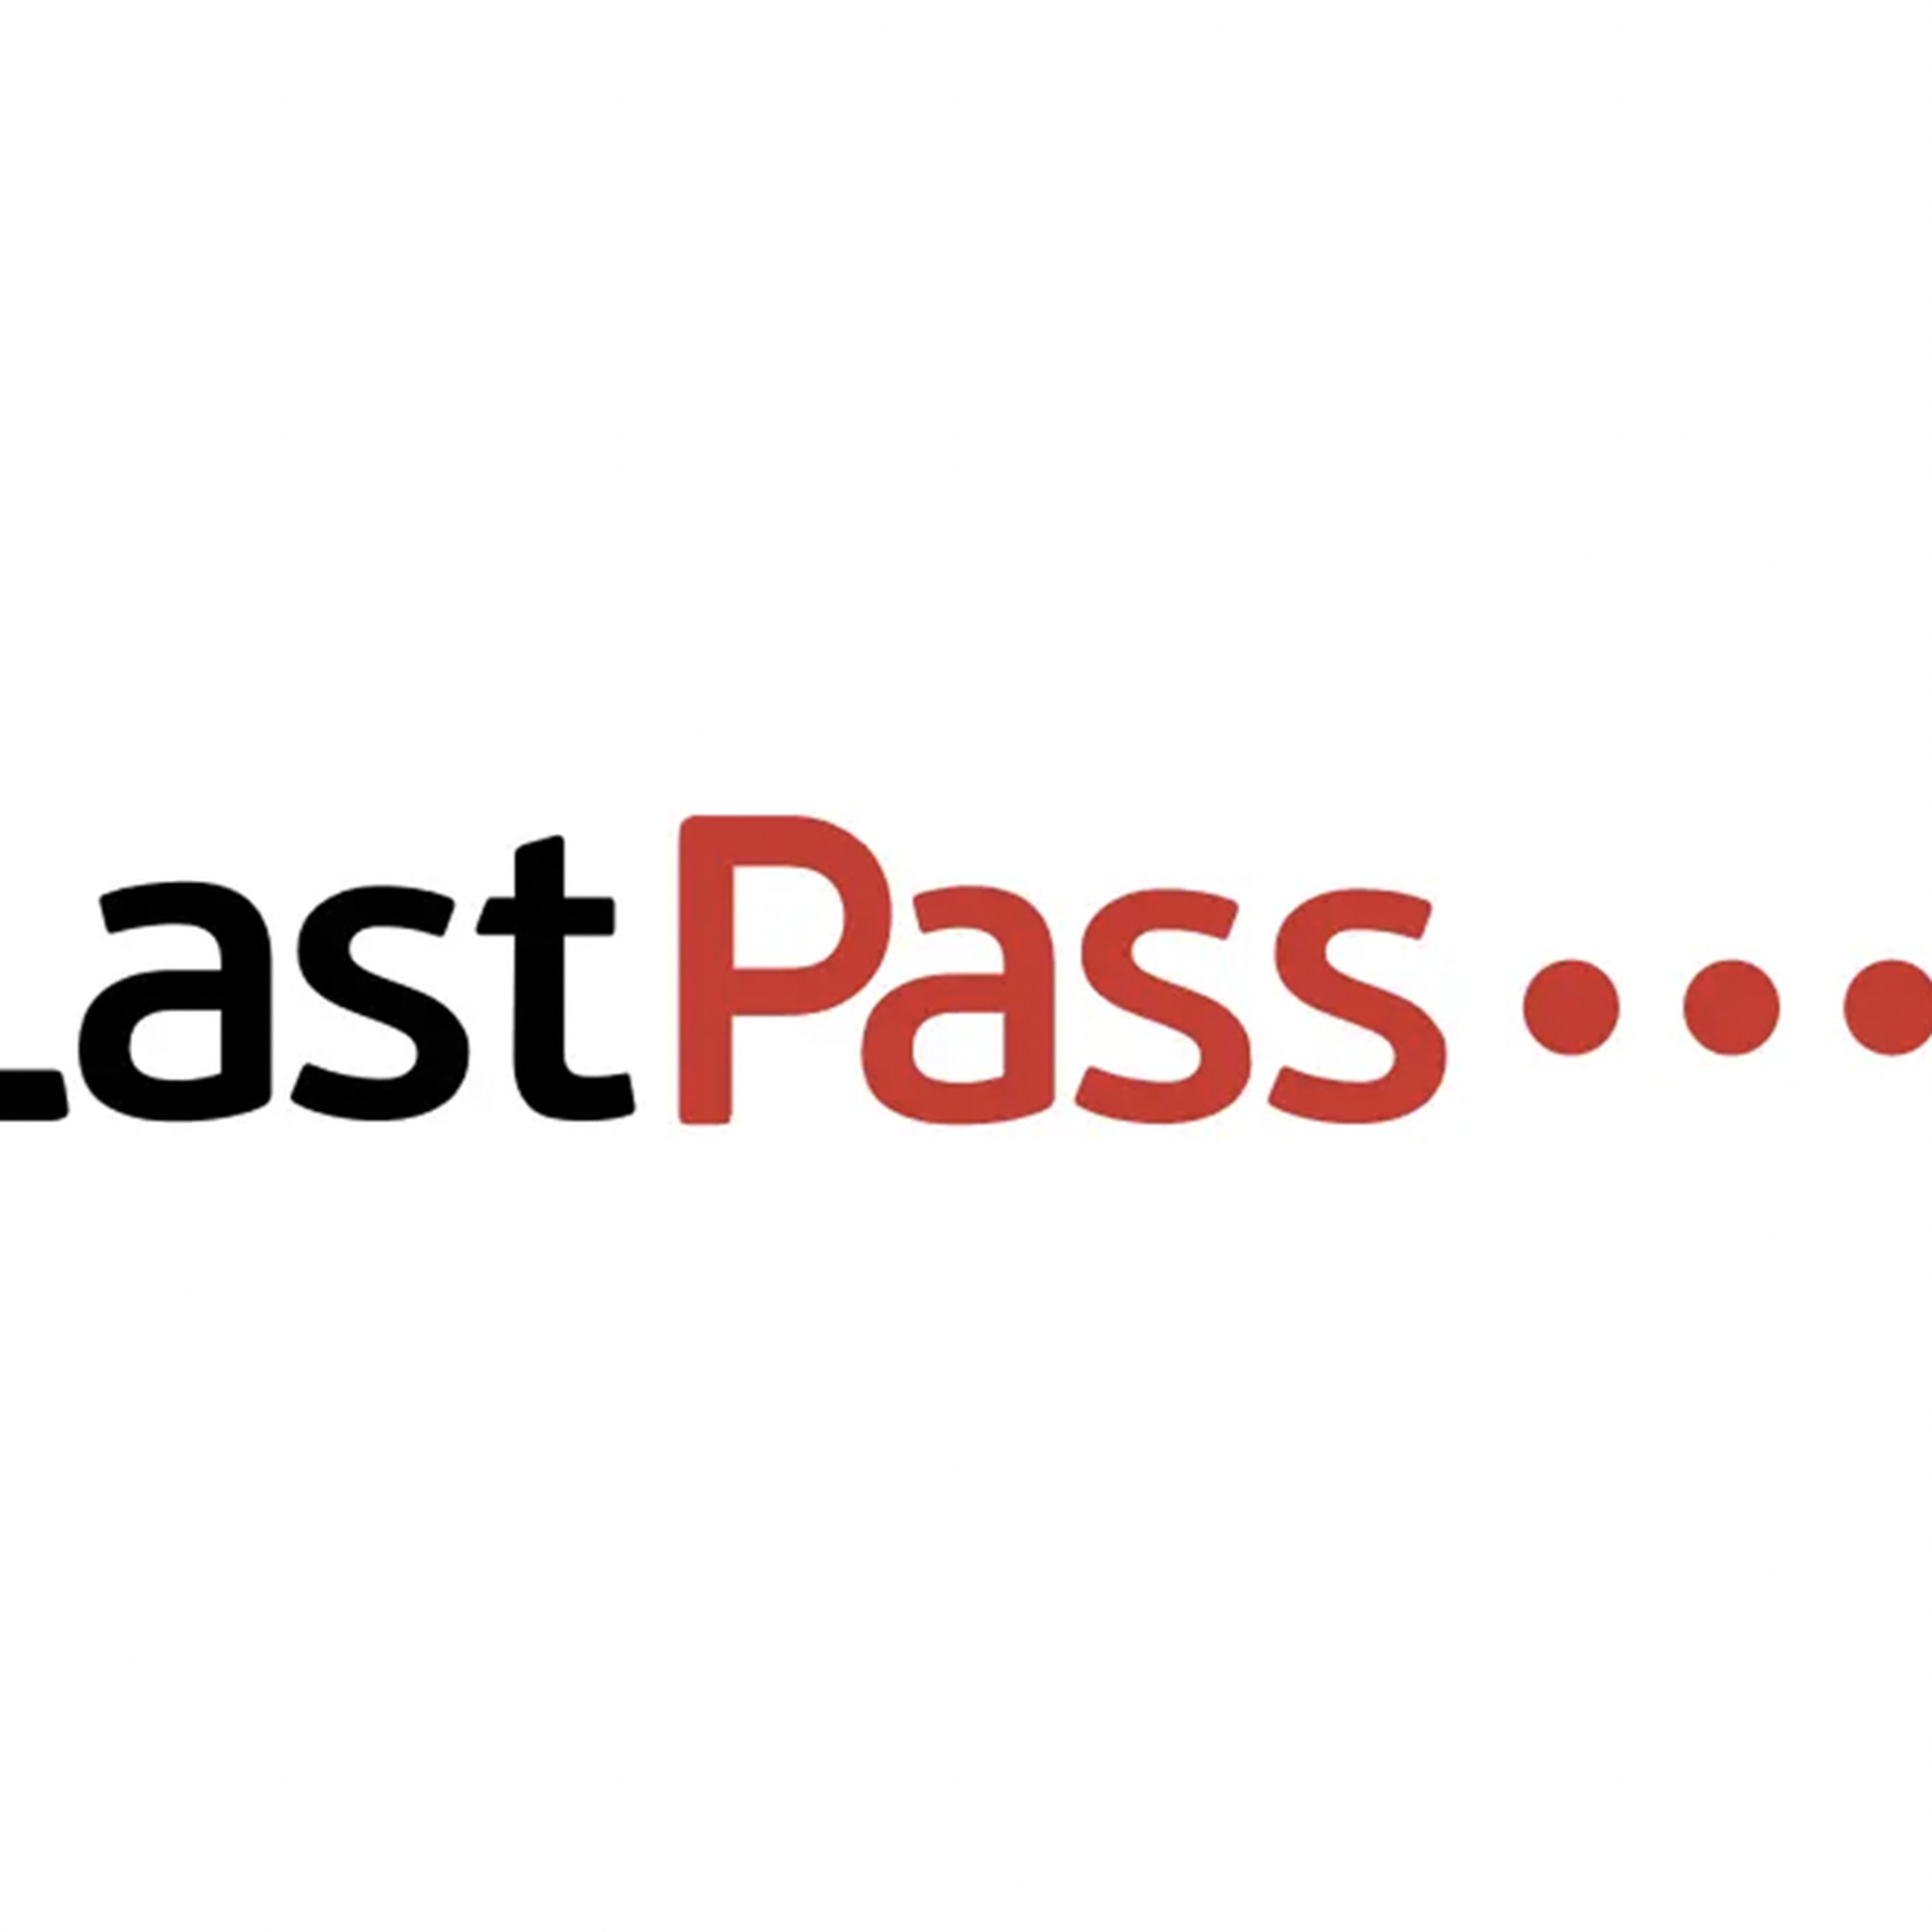 The LastPass logo.